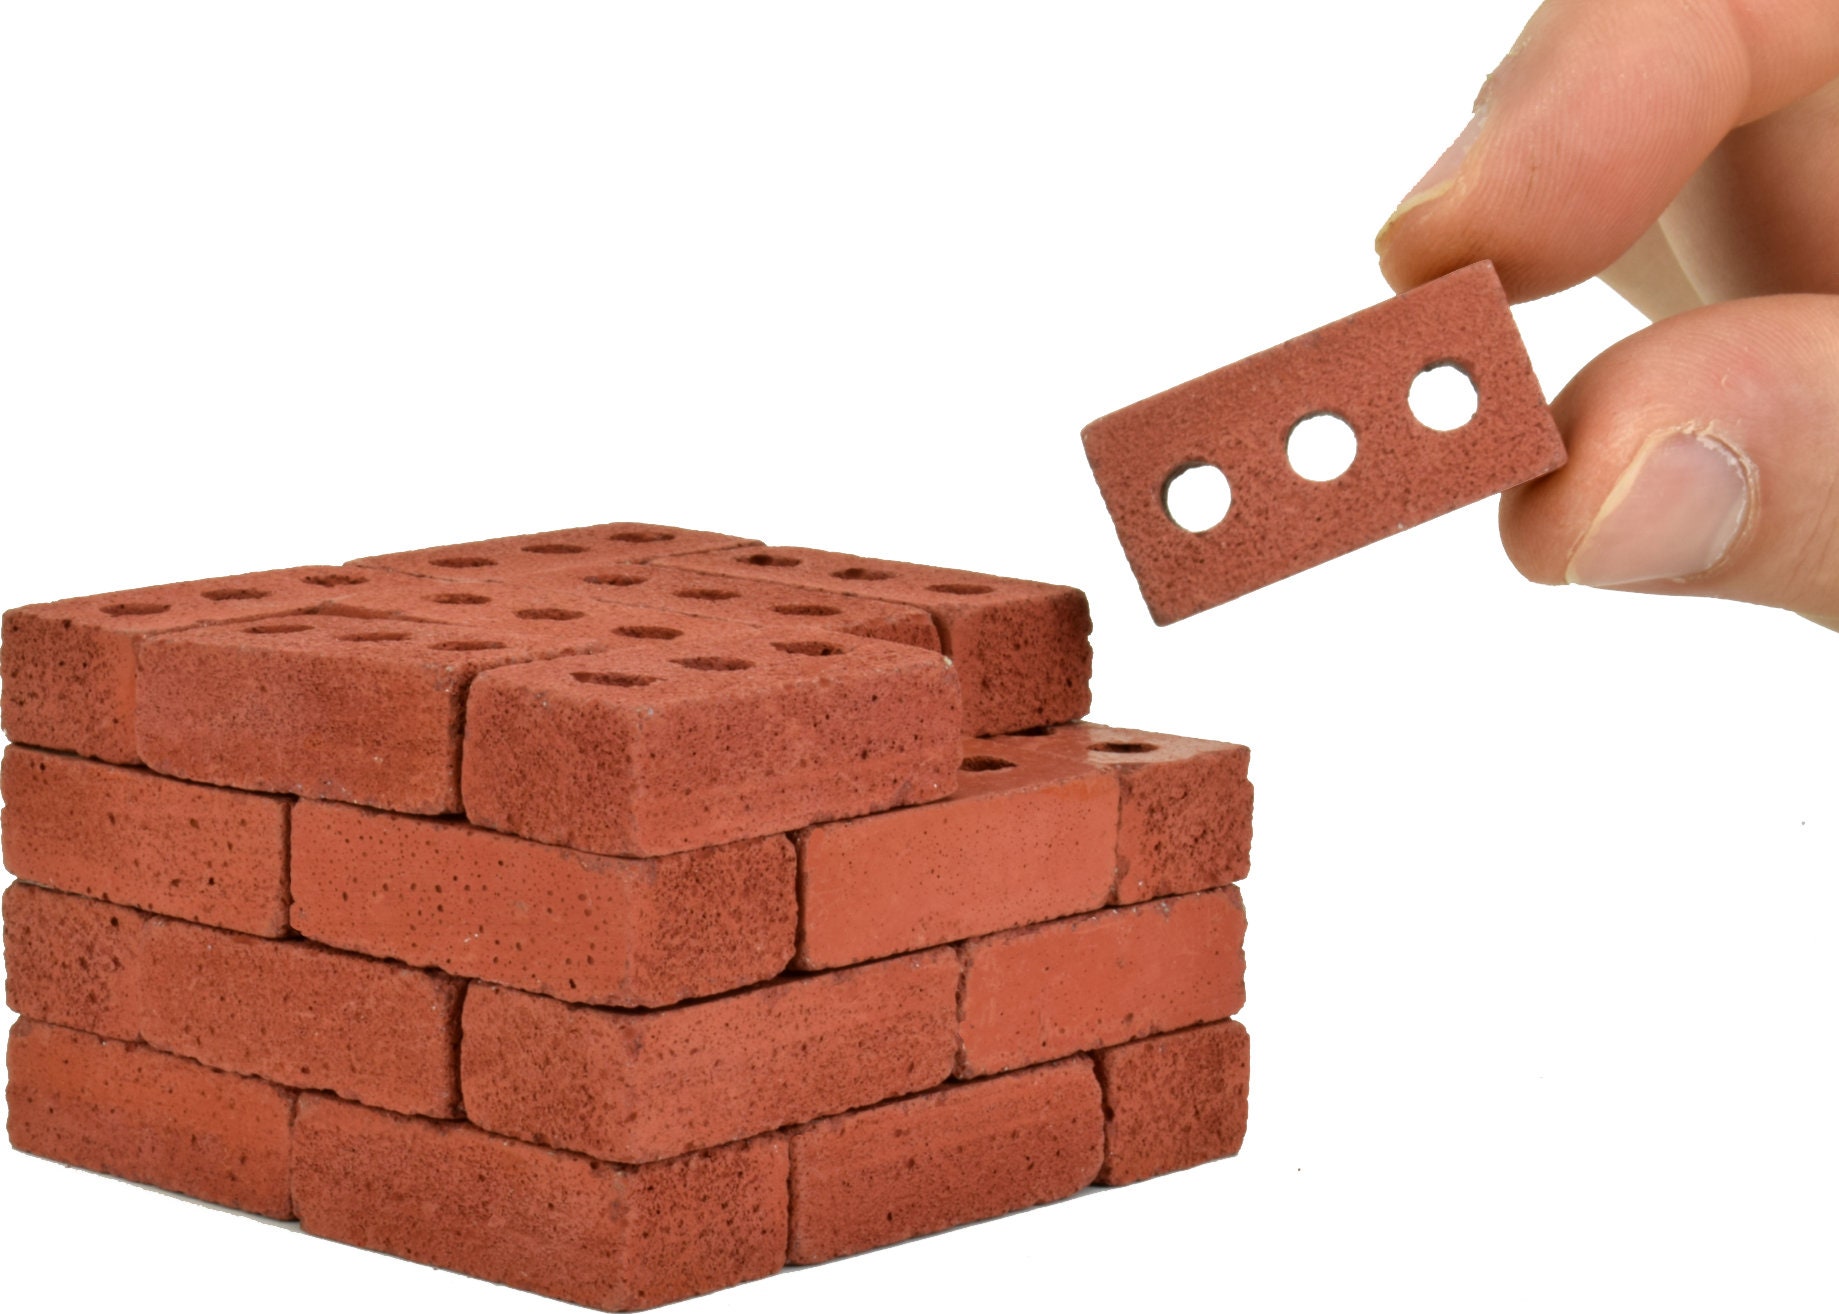 Modeling Clay 1.25 pound brick